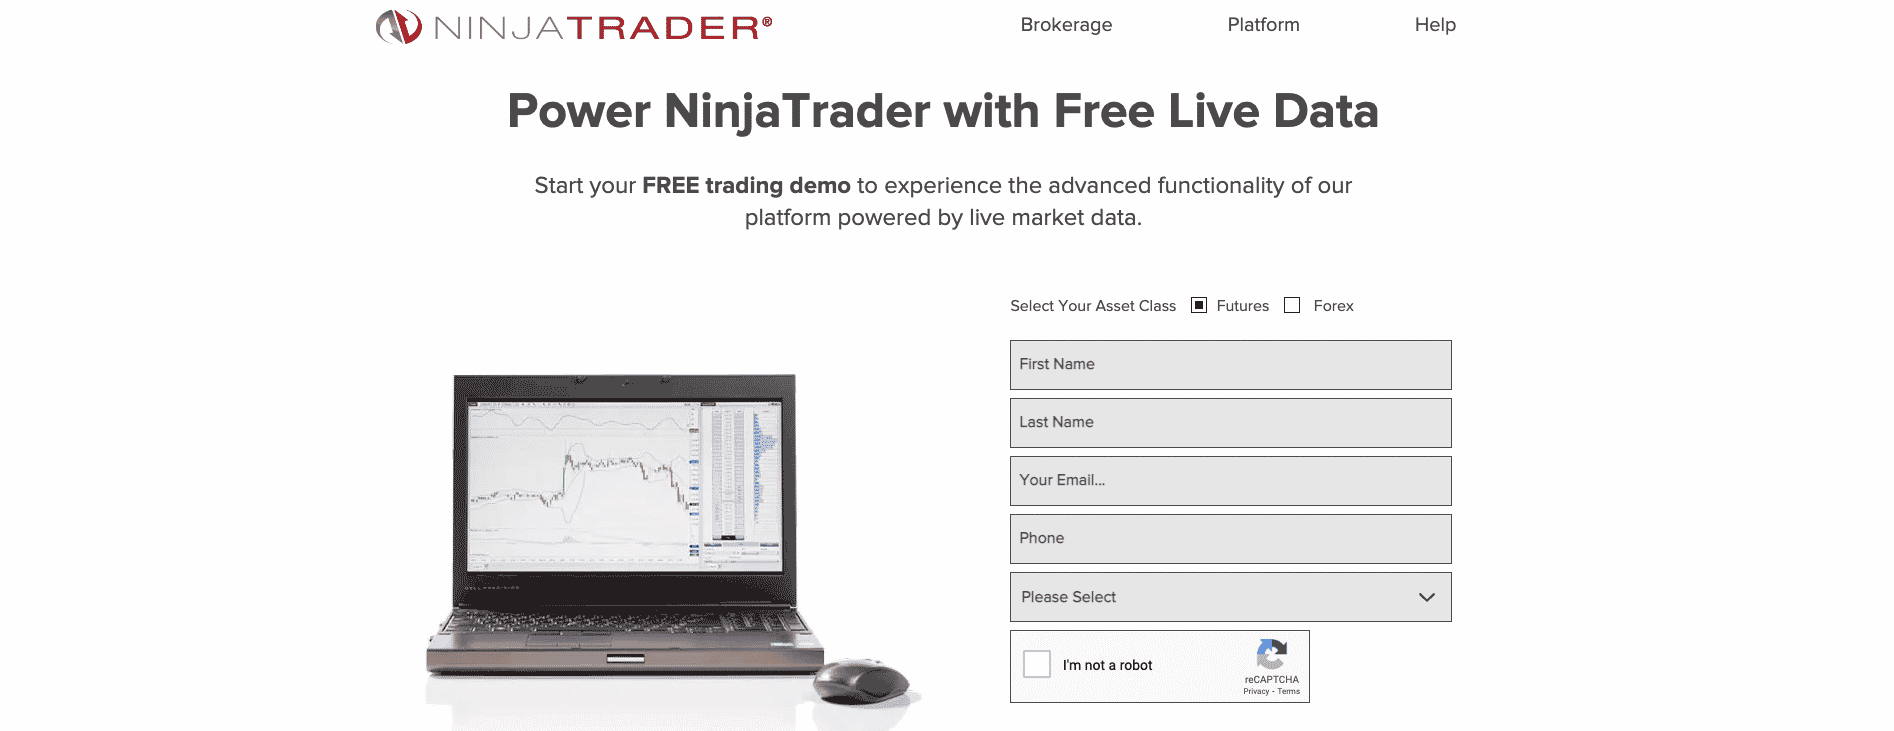 NinjaTrader Demo Account